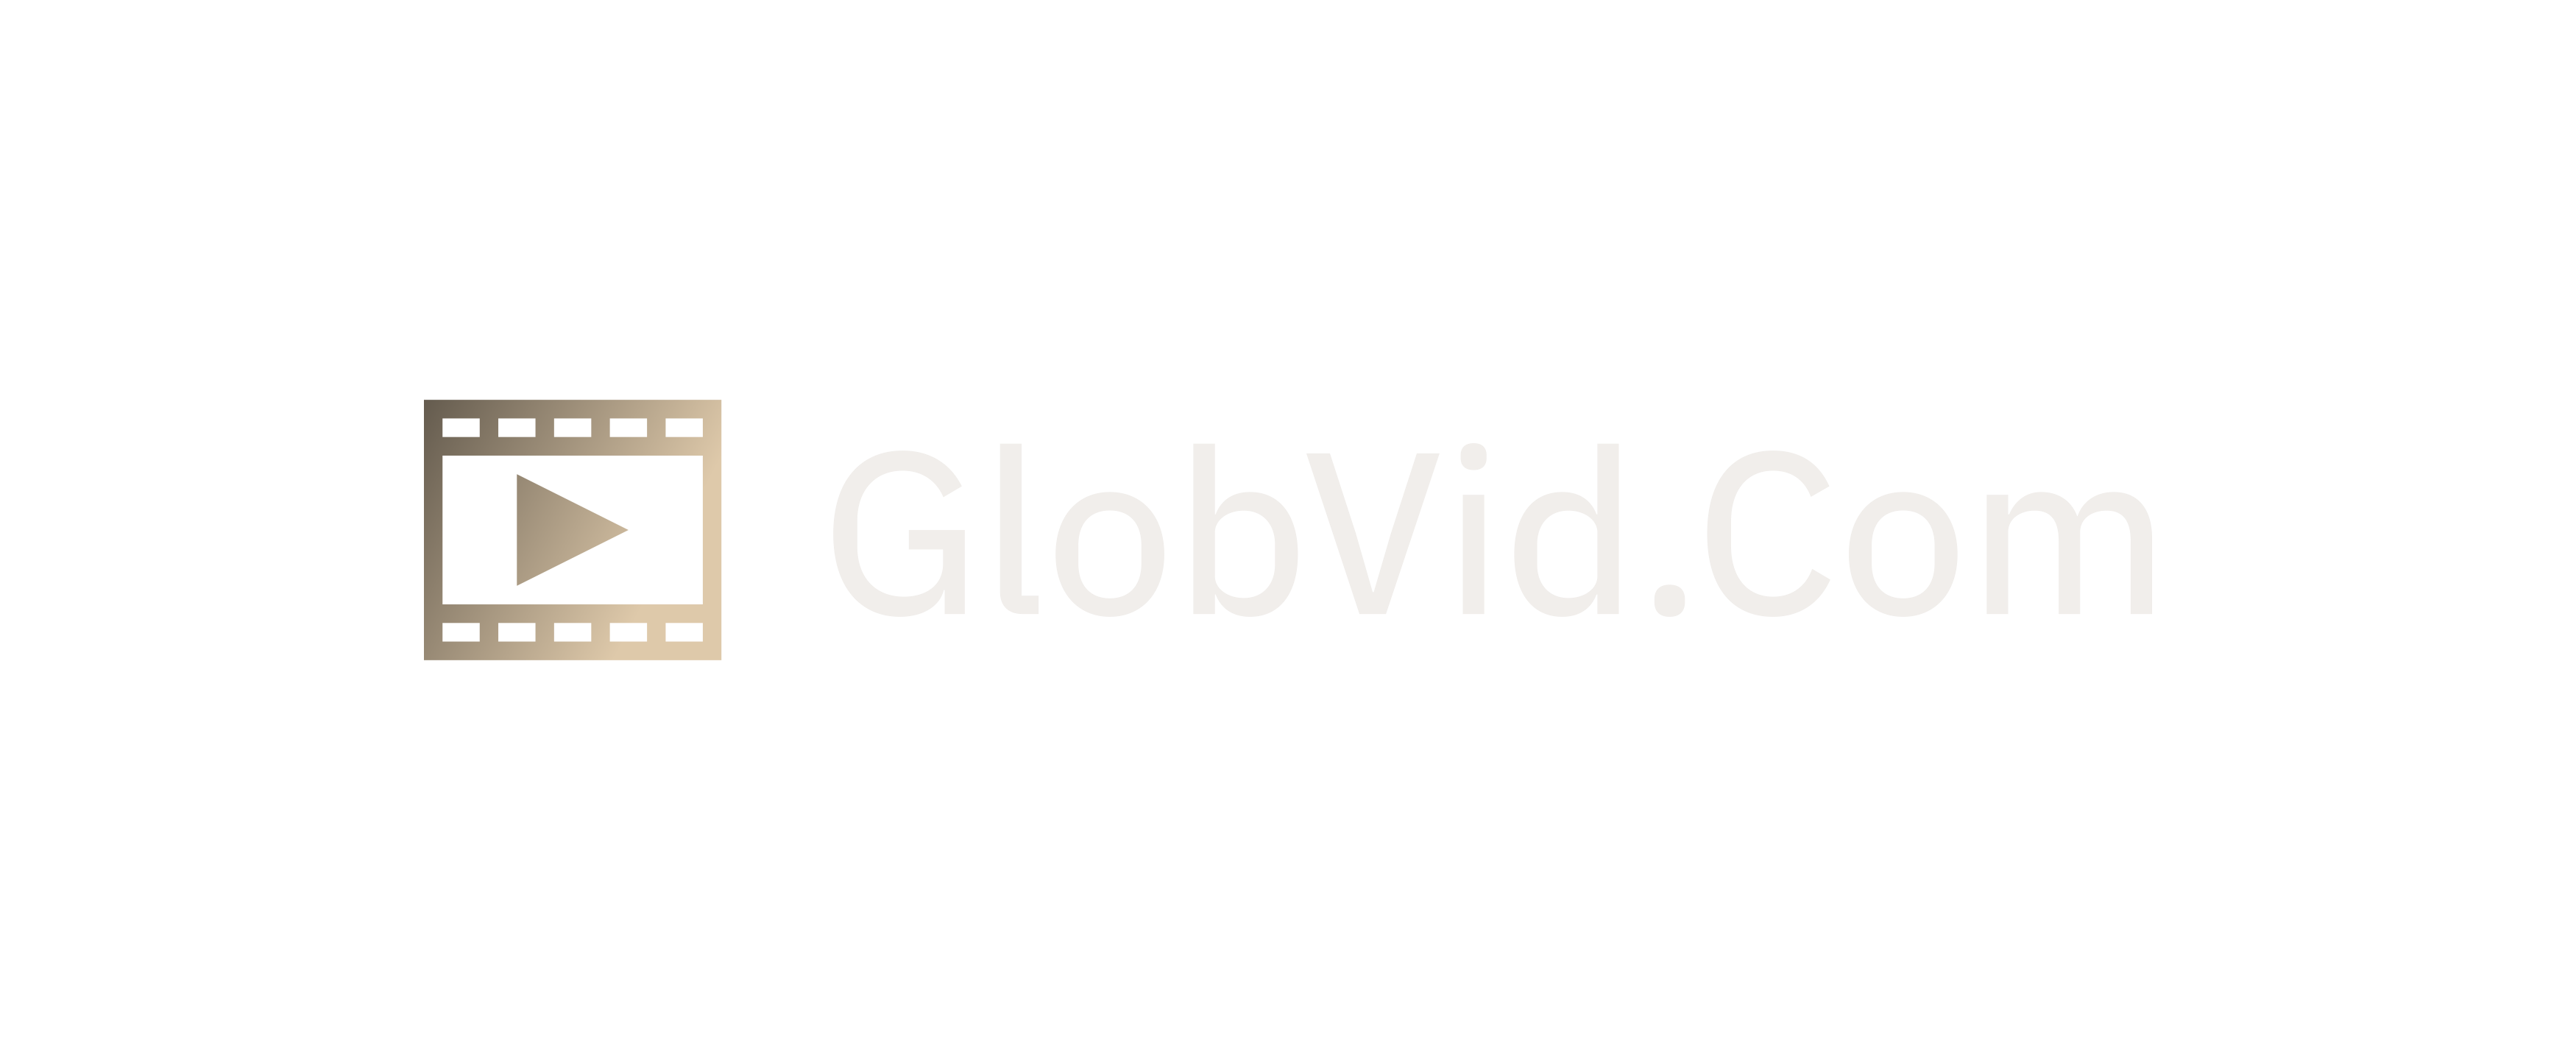 globvid.com